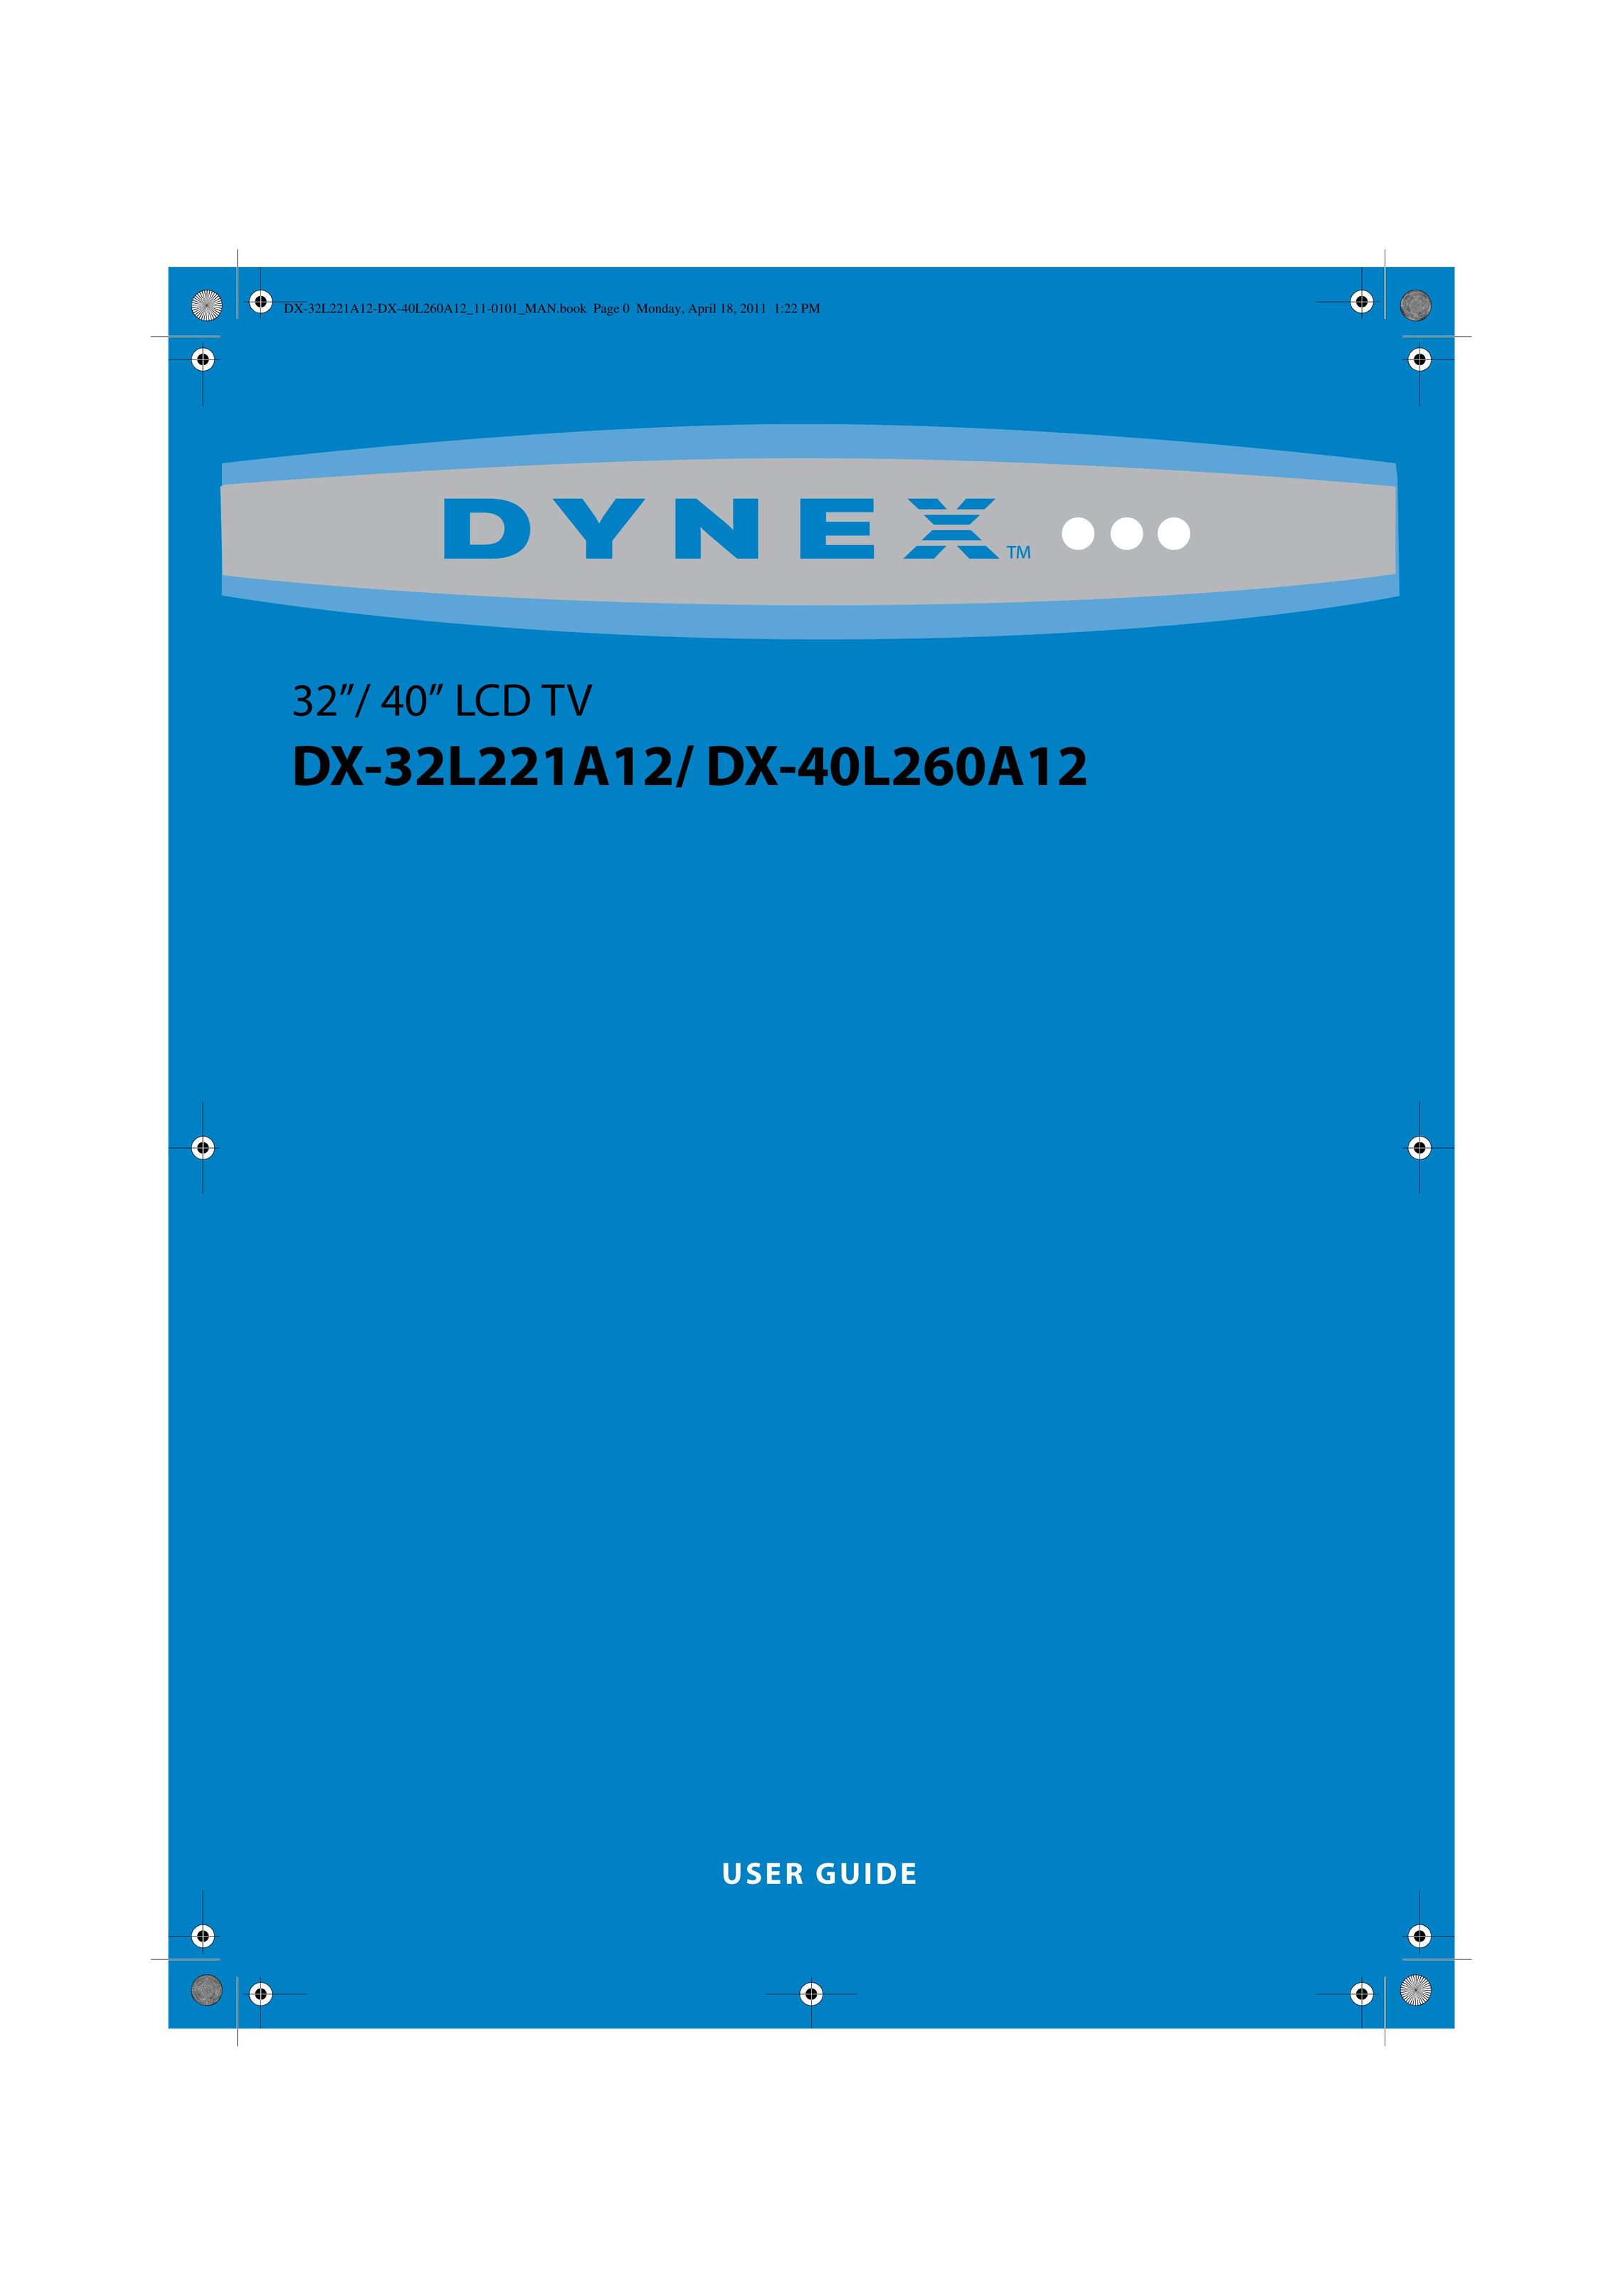 Dynex DX-40L260A12 Flat Panel Television User Manual